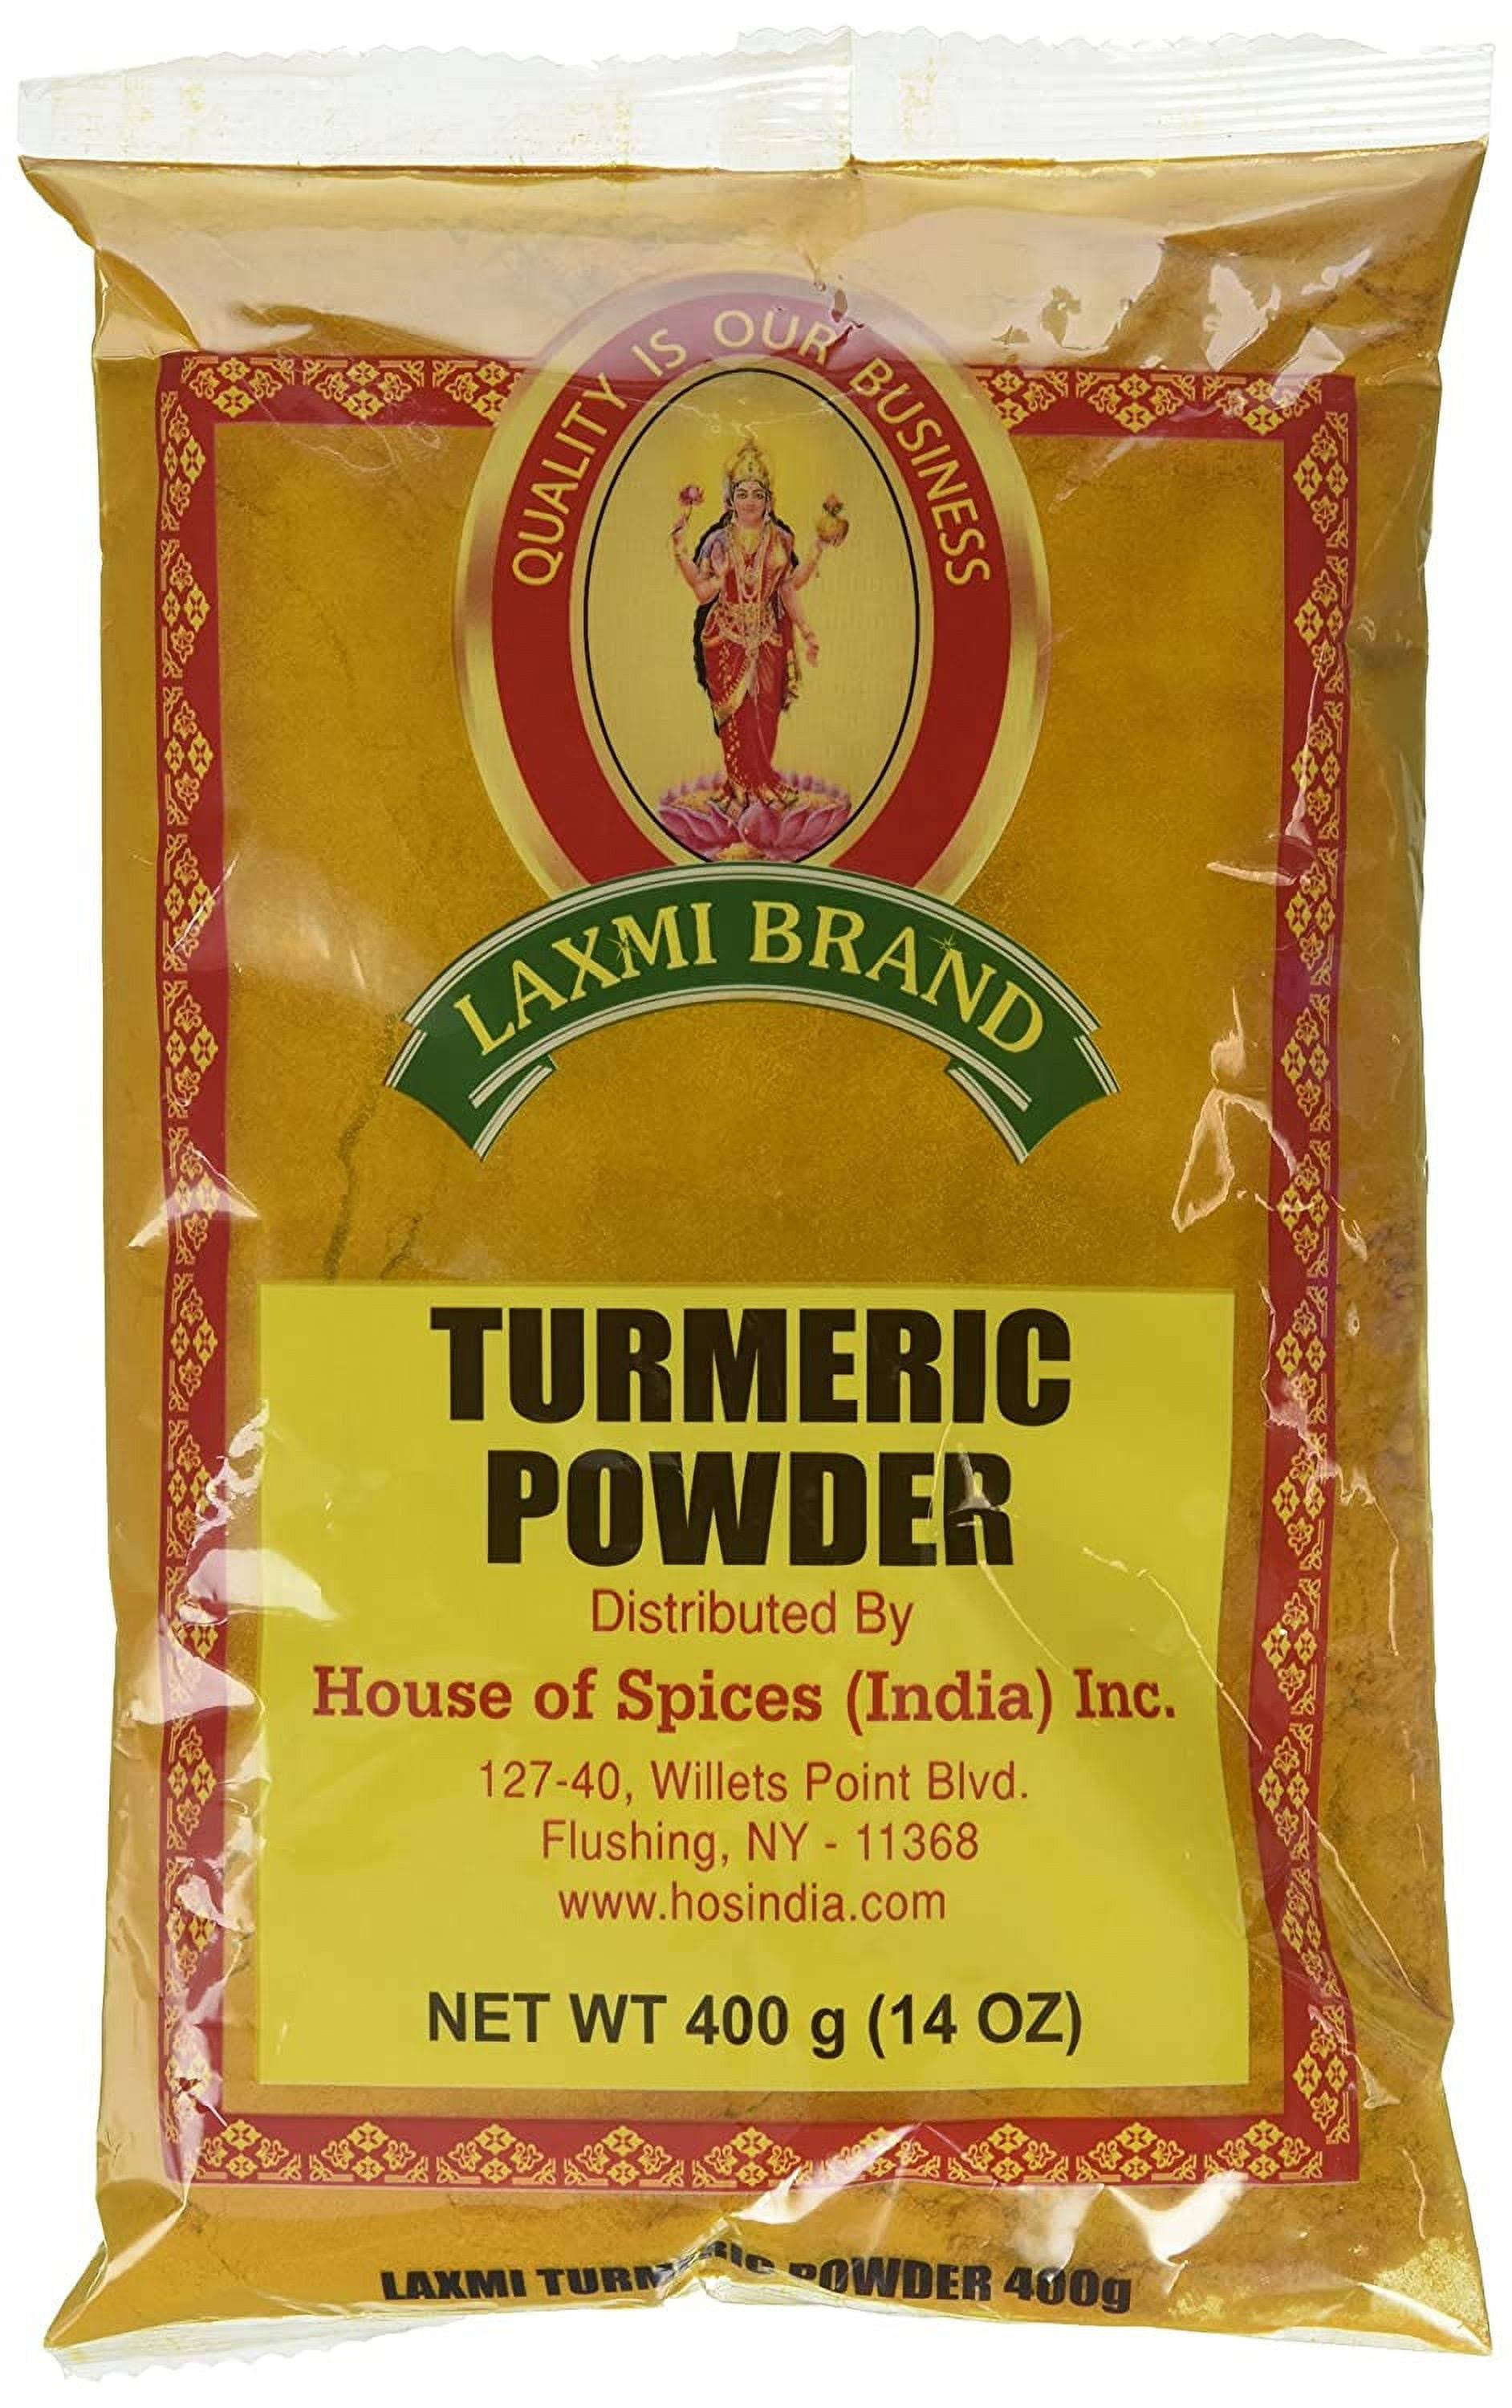 Laxmi Brand Turmeric Powder